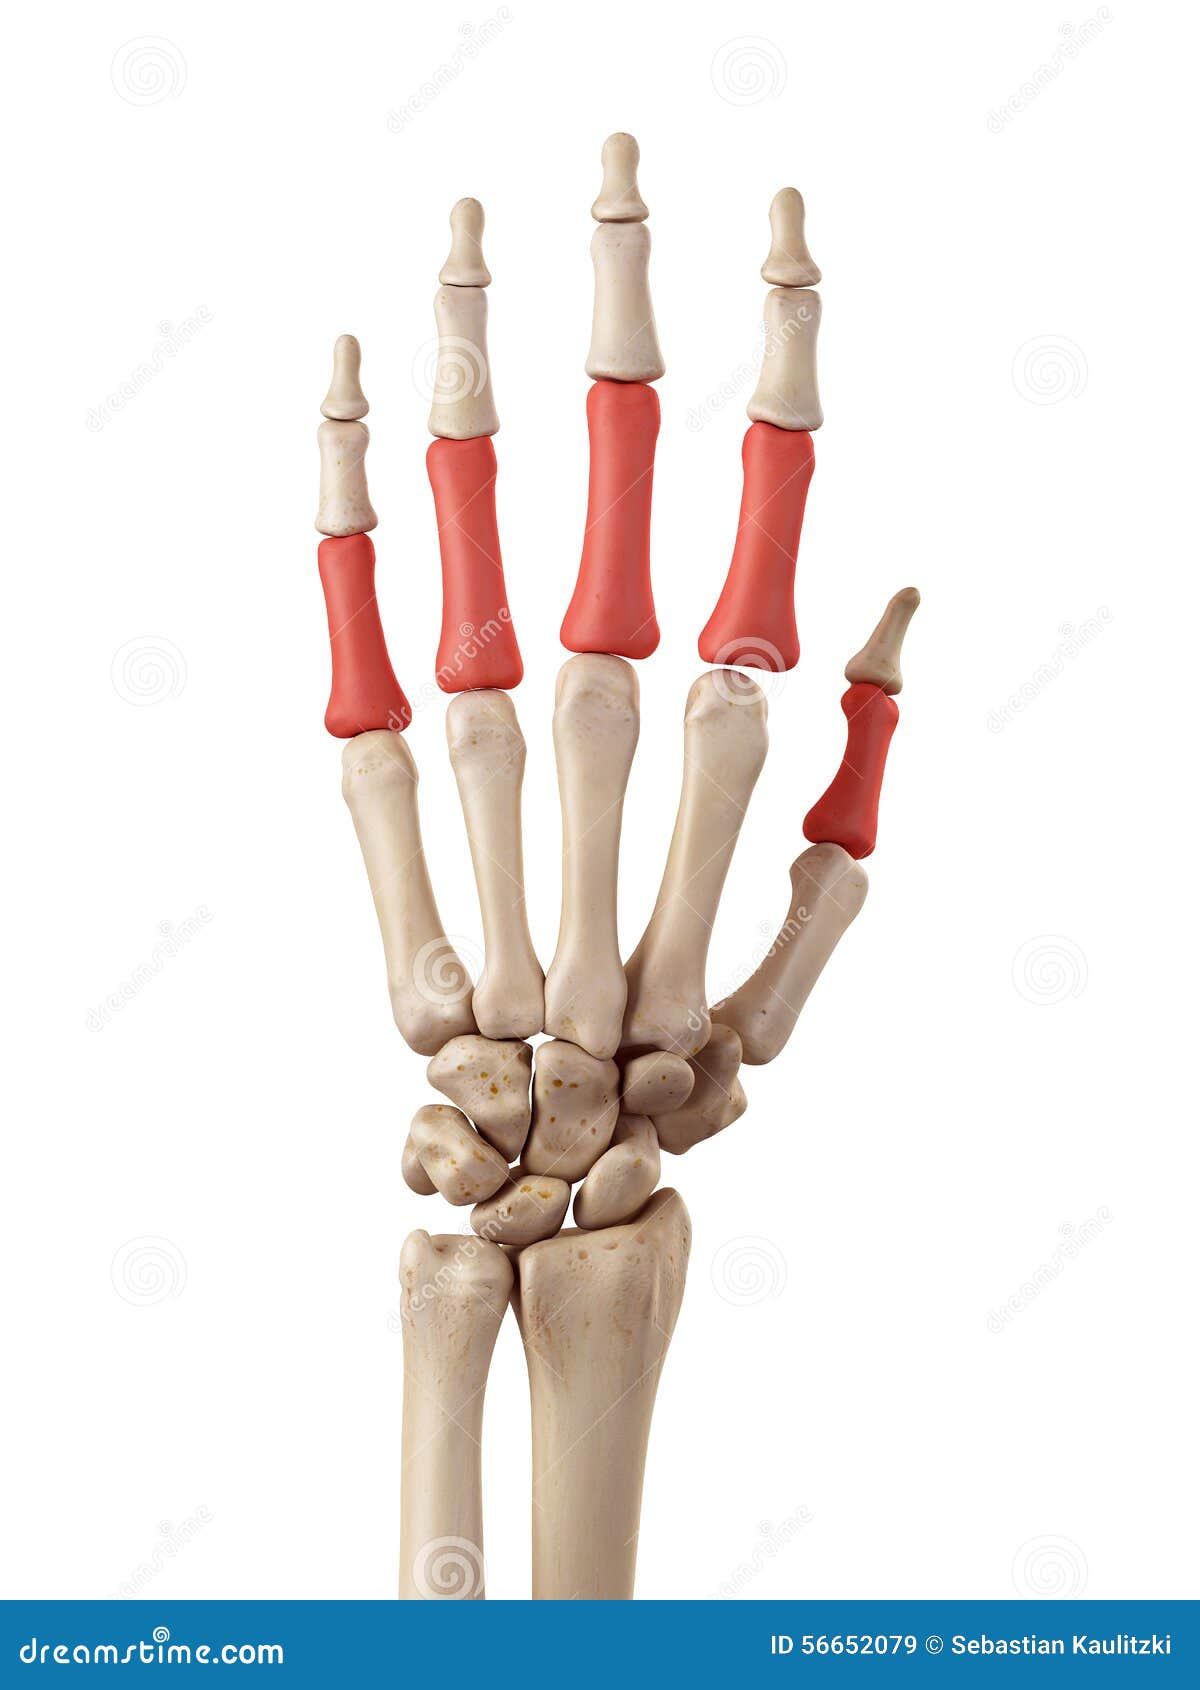 the proximal phalanx bones